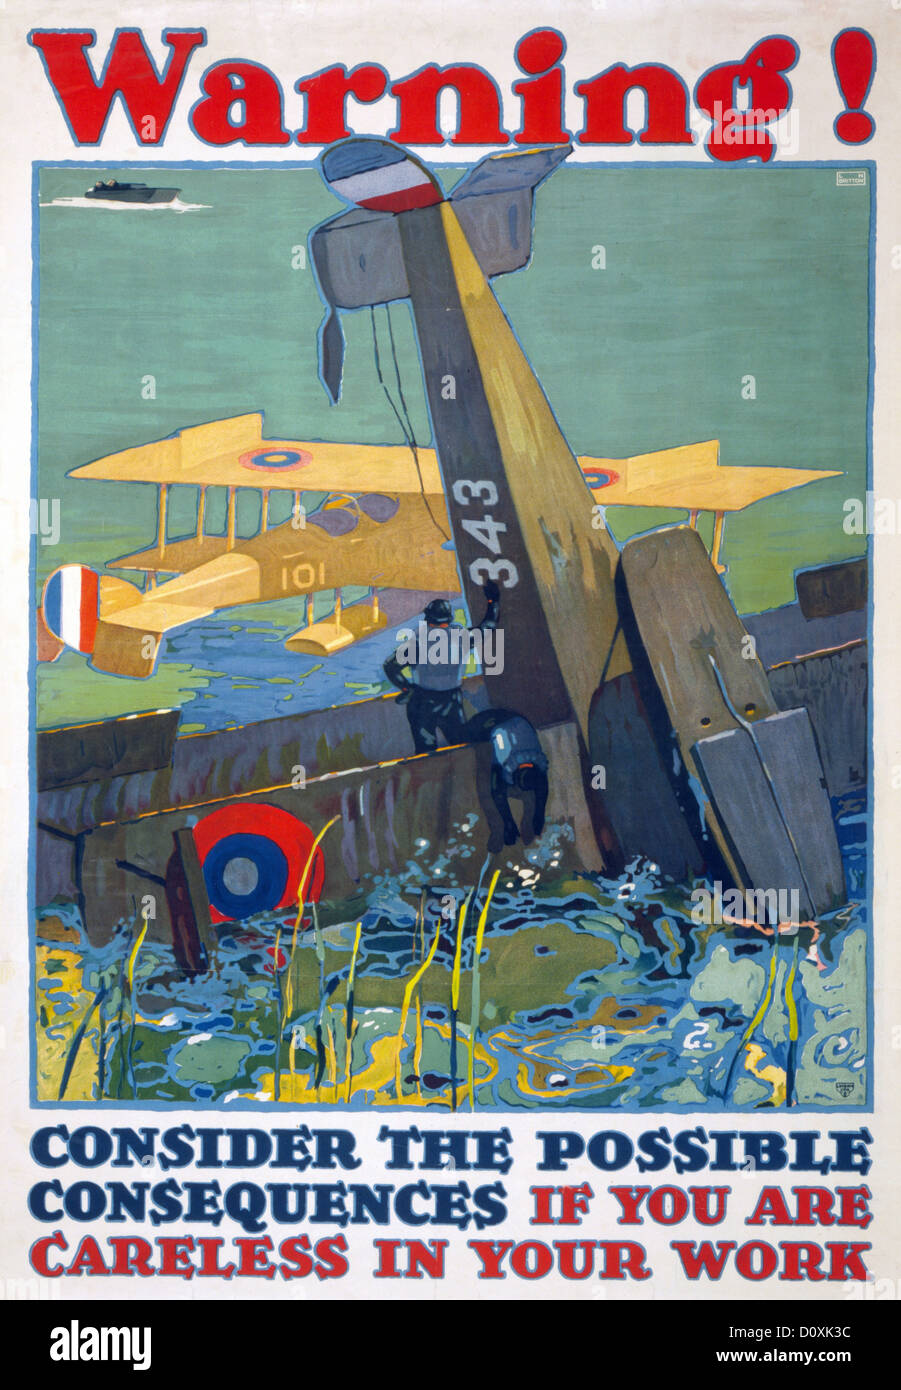 USA, World War I, American, poster, airplane, crashed, ocean, survivors, Warning, careless, work, 1917, Stock Photo